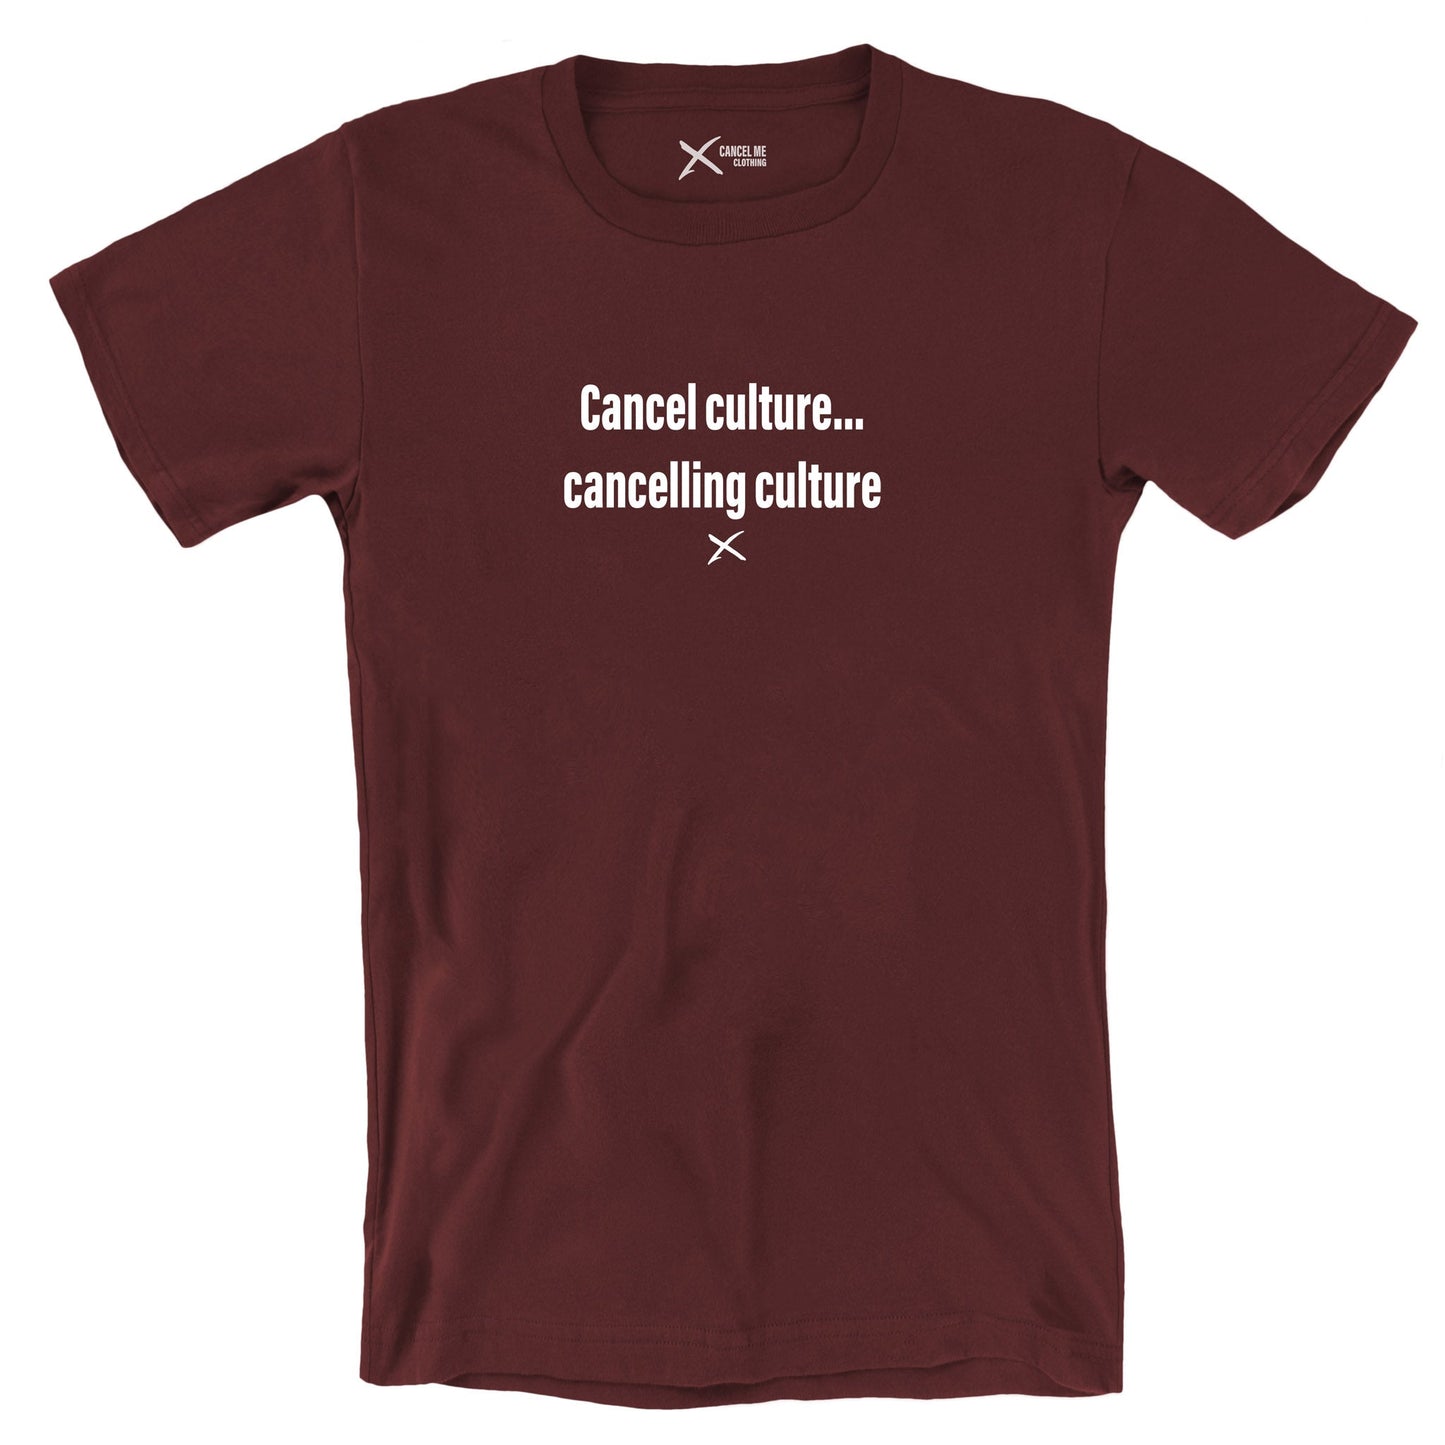 Cancel culture... cancelling culture - Shirt